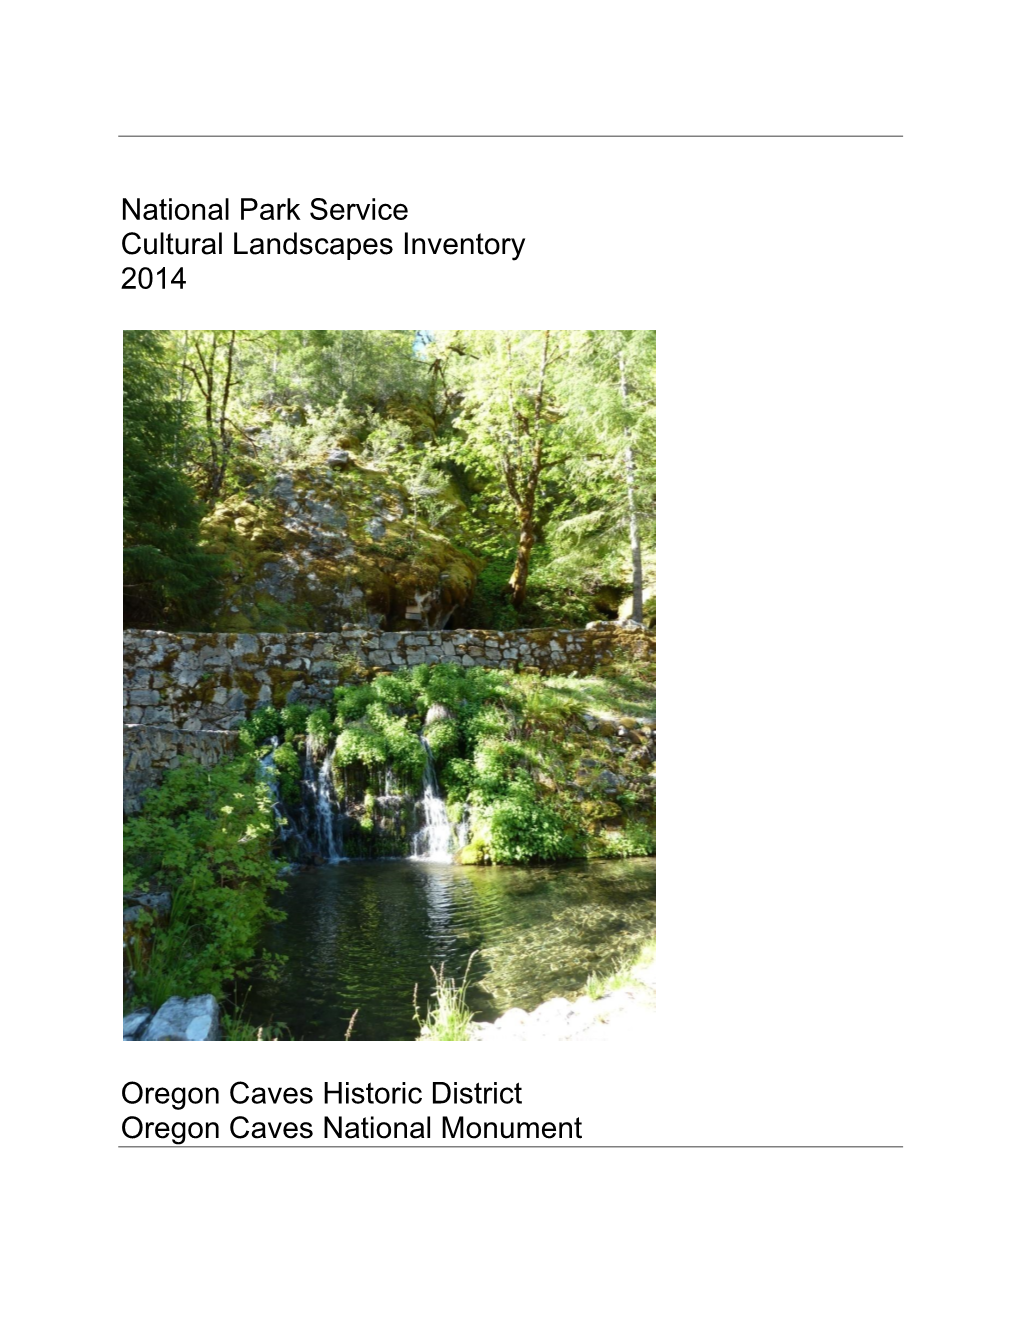 Cultural Landscapes Inventory: Oregon Caves Historic District